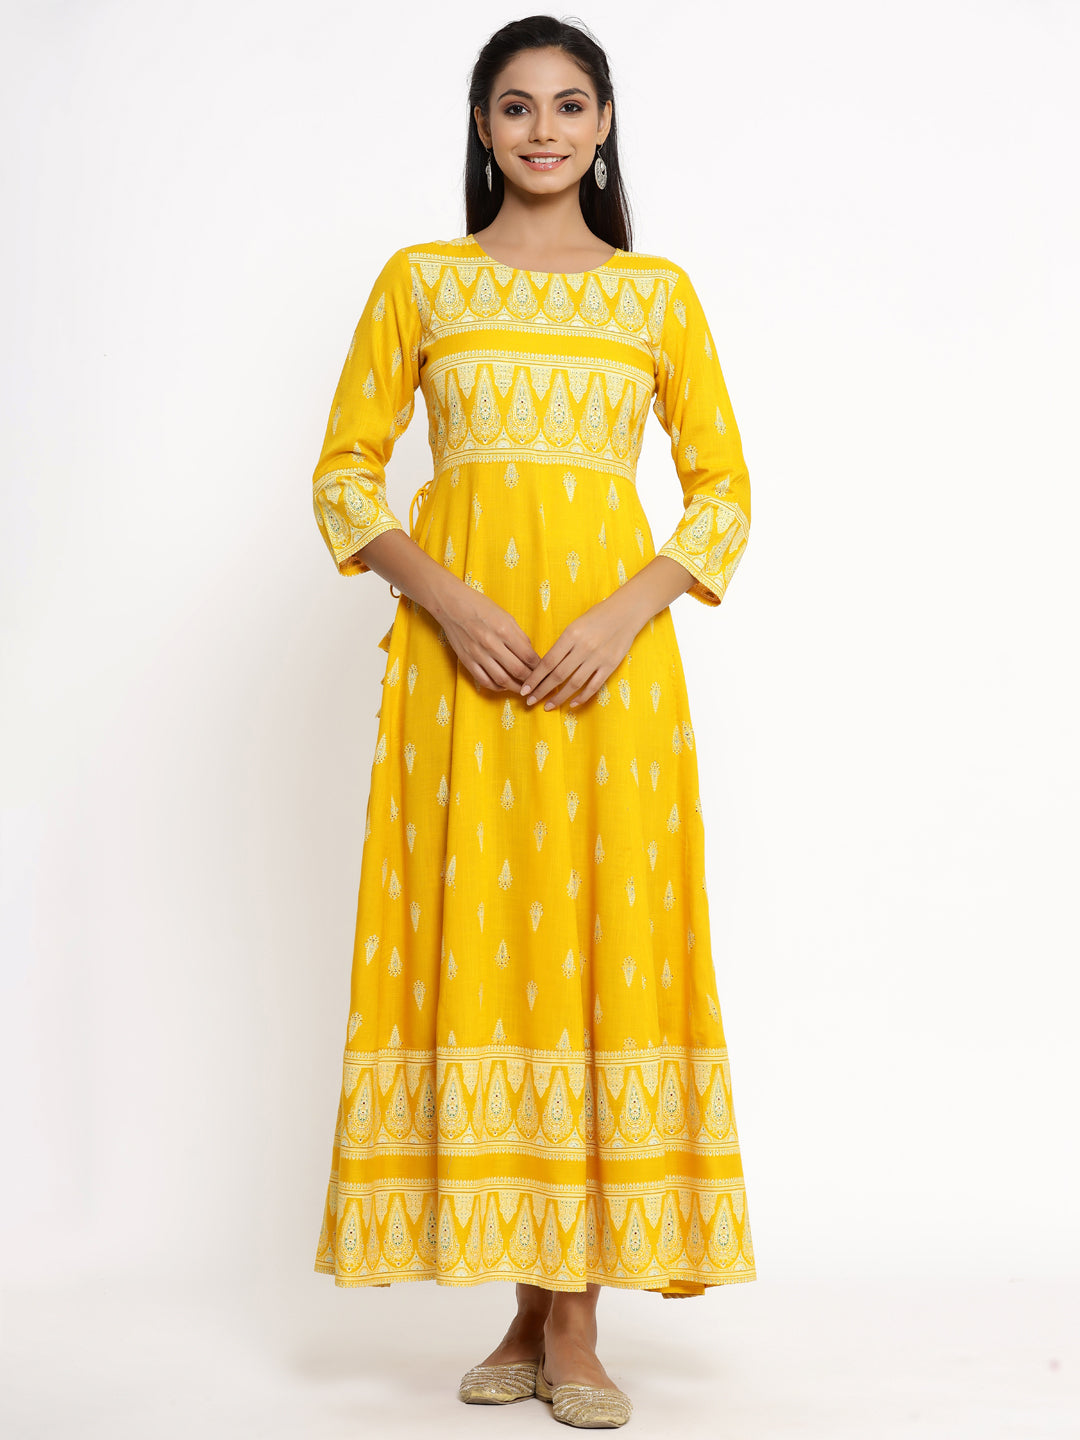 Women's Self Desgin Rayon Fabric Anarkali Yellow Color - Kipek